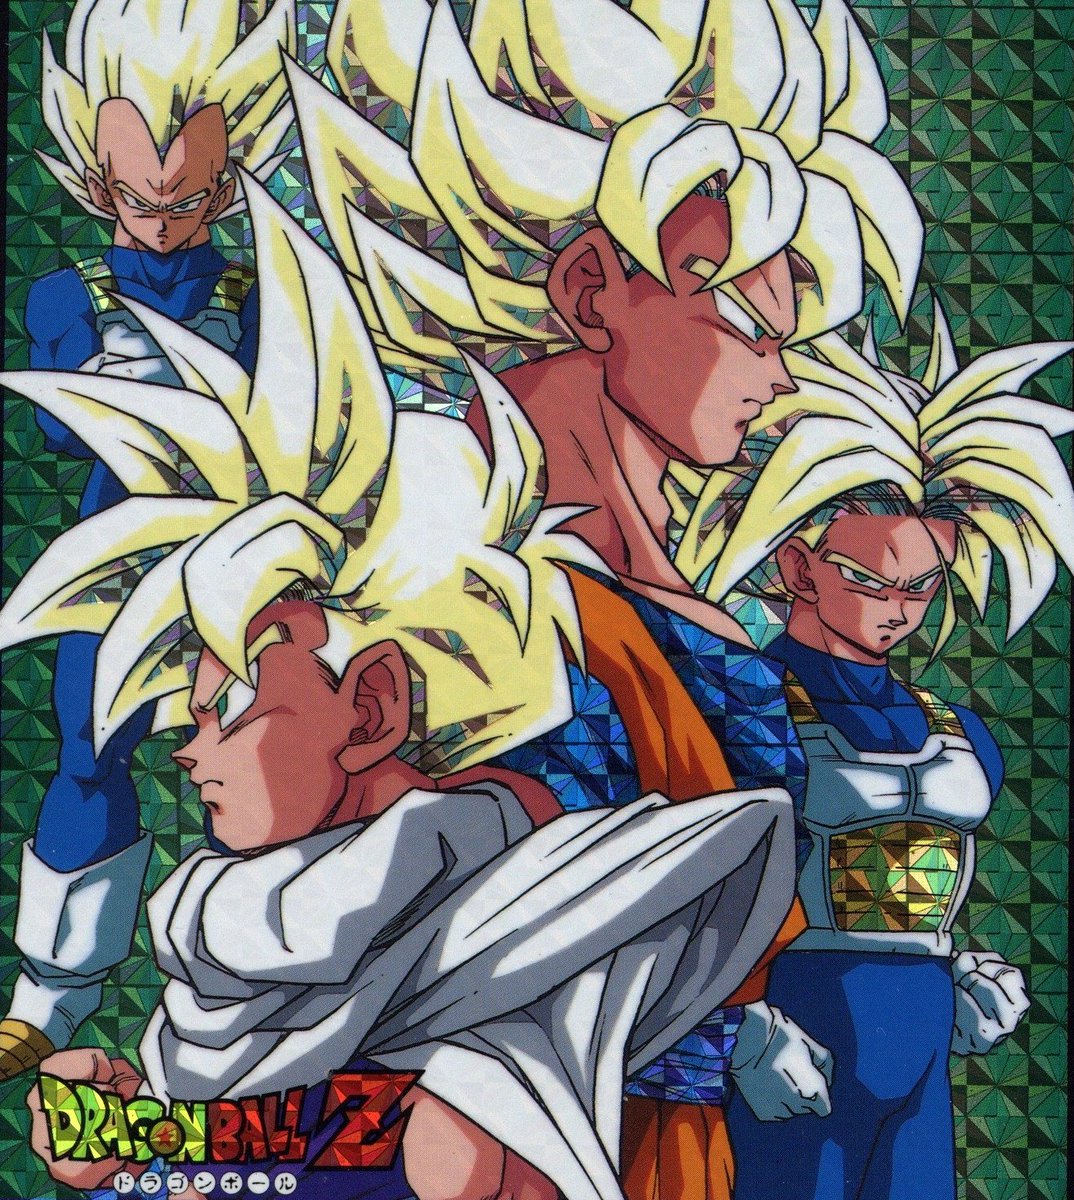 Dragon Ball Z 90s Retro Art 

Cell Arc - Super Saiyan Dragon Team
#DragonBallZ #Dbz #Retro #Shueisha #Toeianimation #vintage #90sanimestyle #Goku #Cellsaga